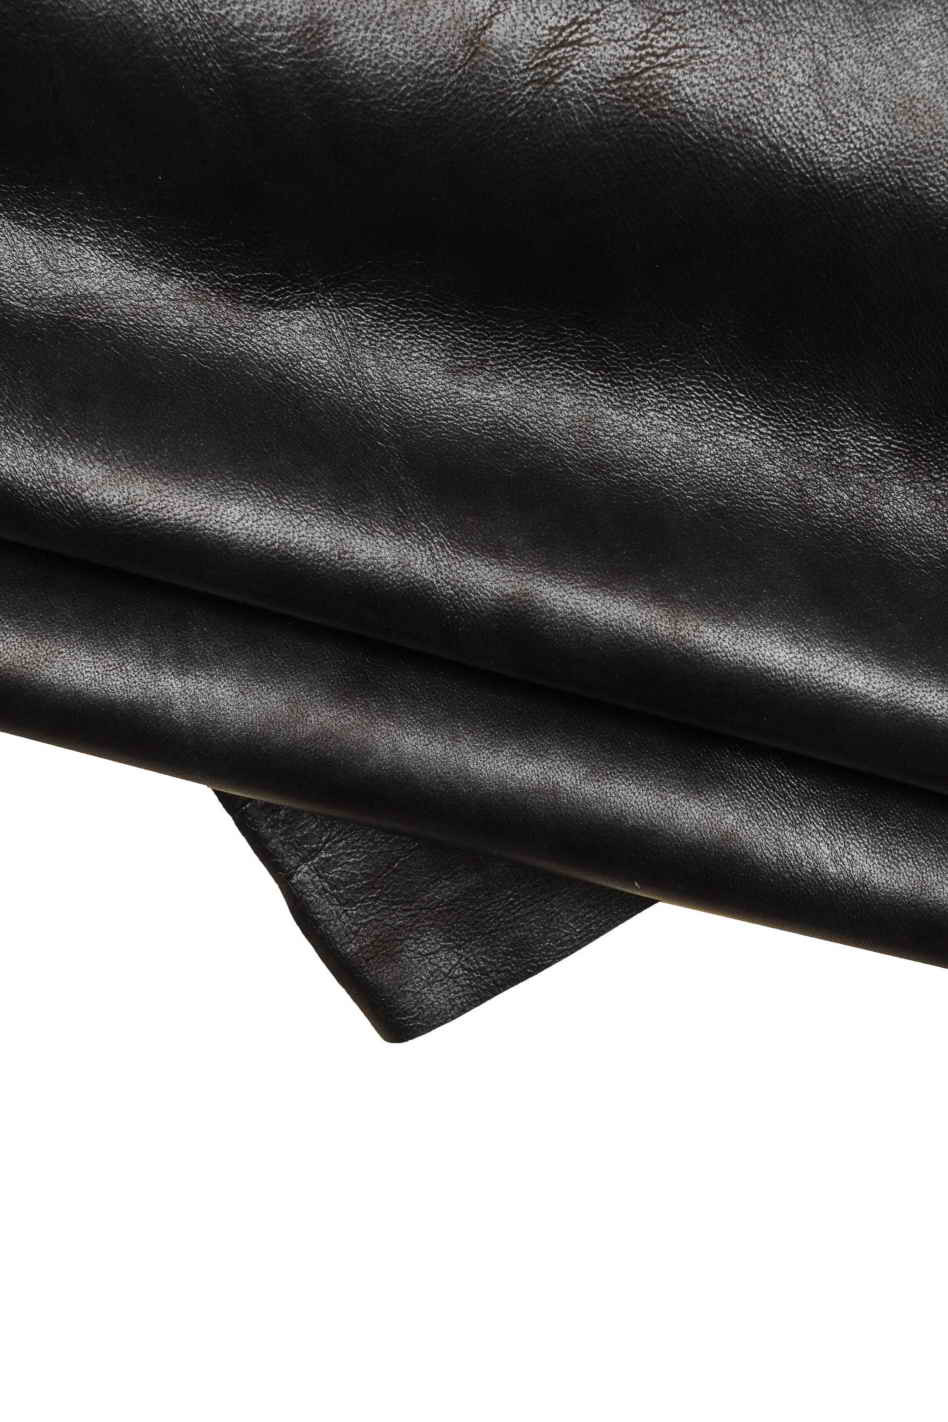 Pebble Printed Cowhide: Italian Upholstery Leather